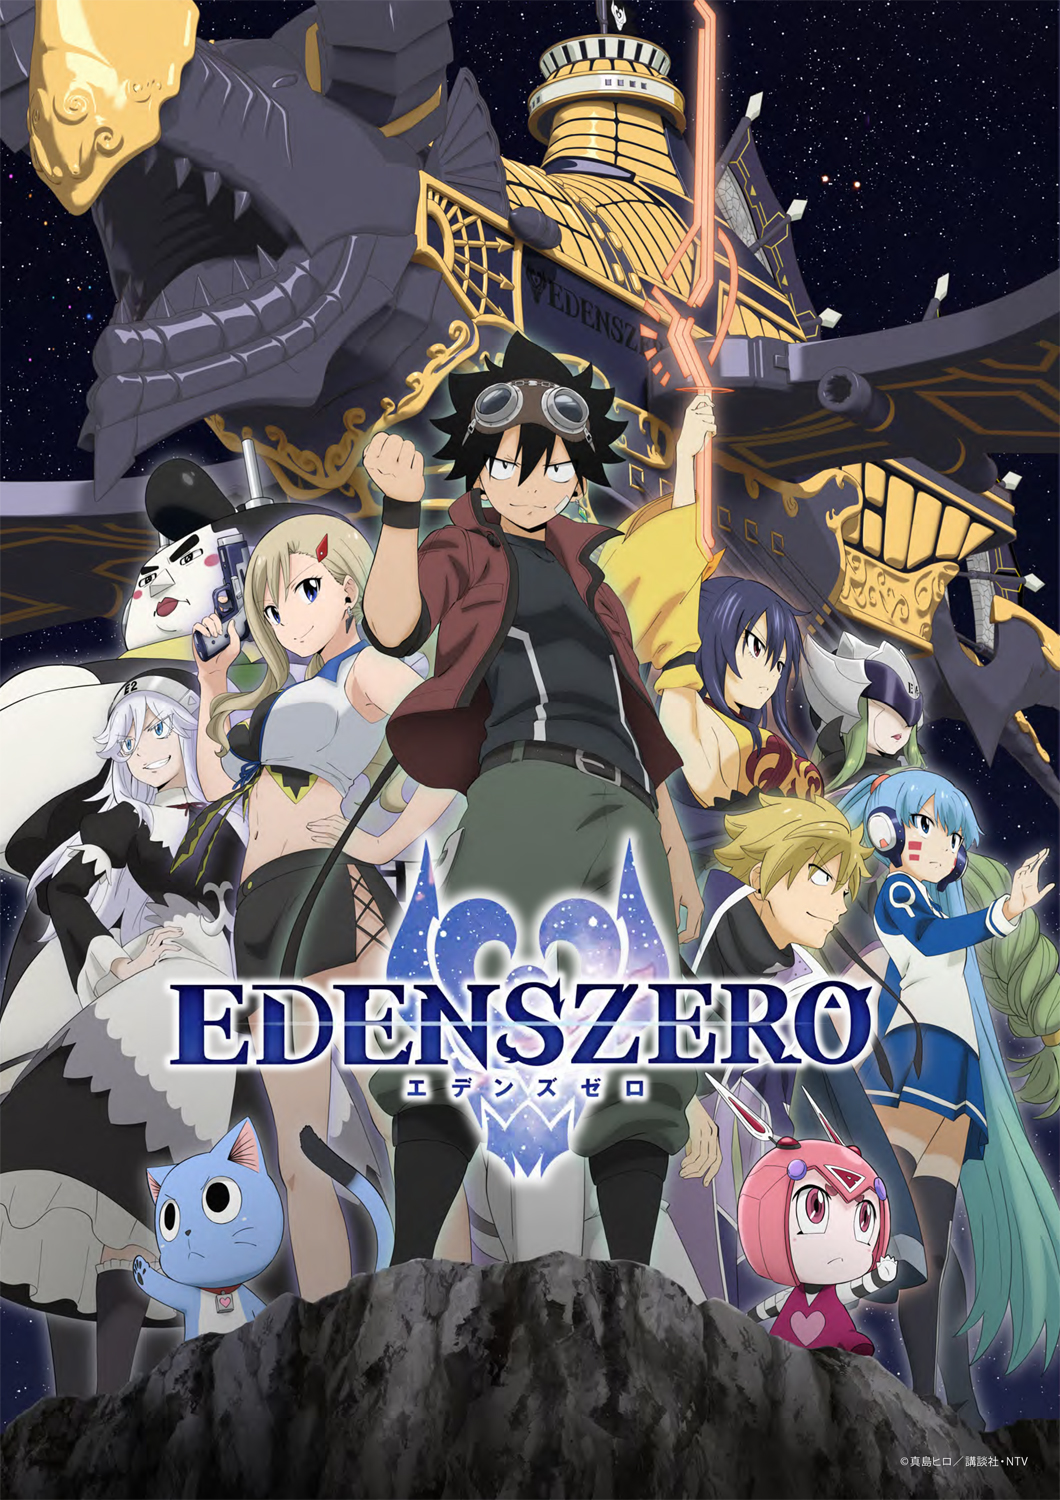 Edens Zero (season 2) - Wikipedia